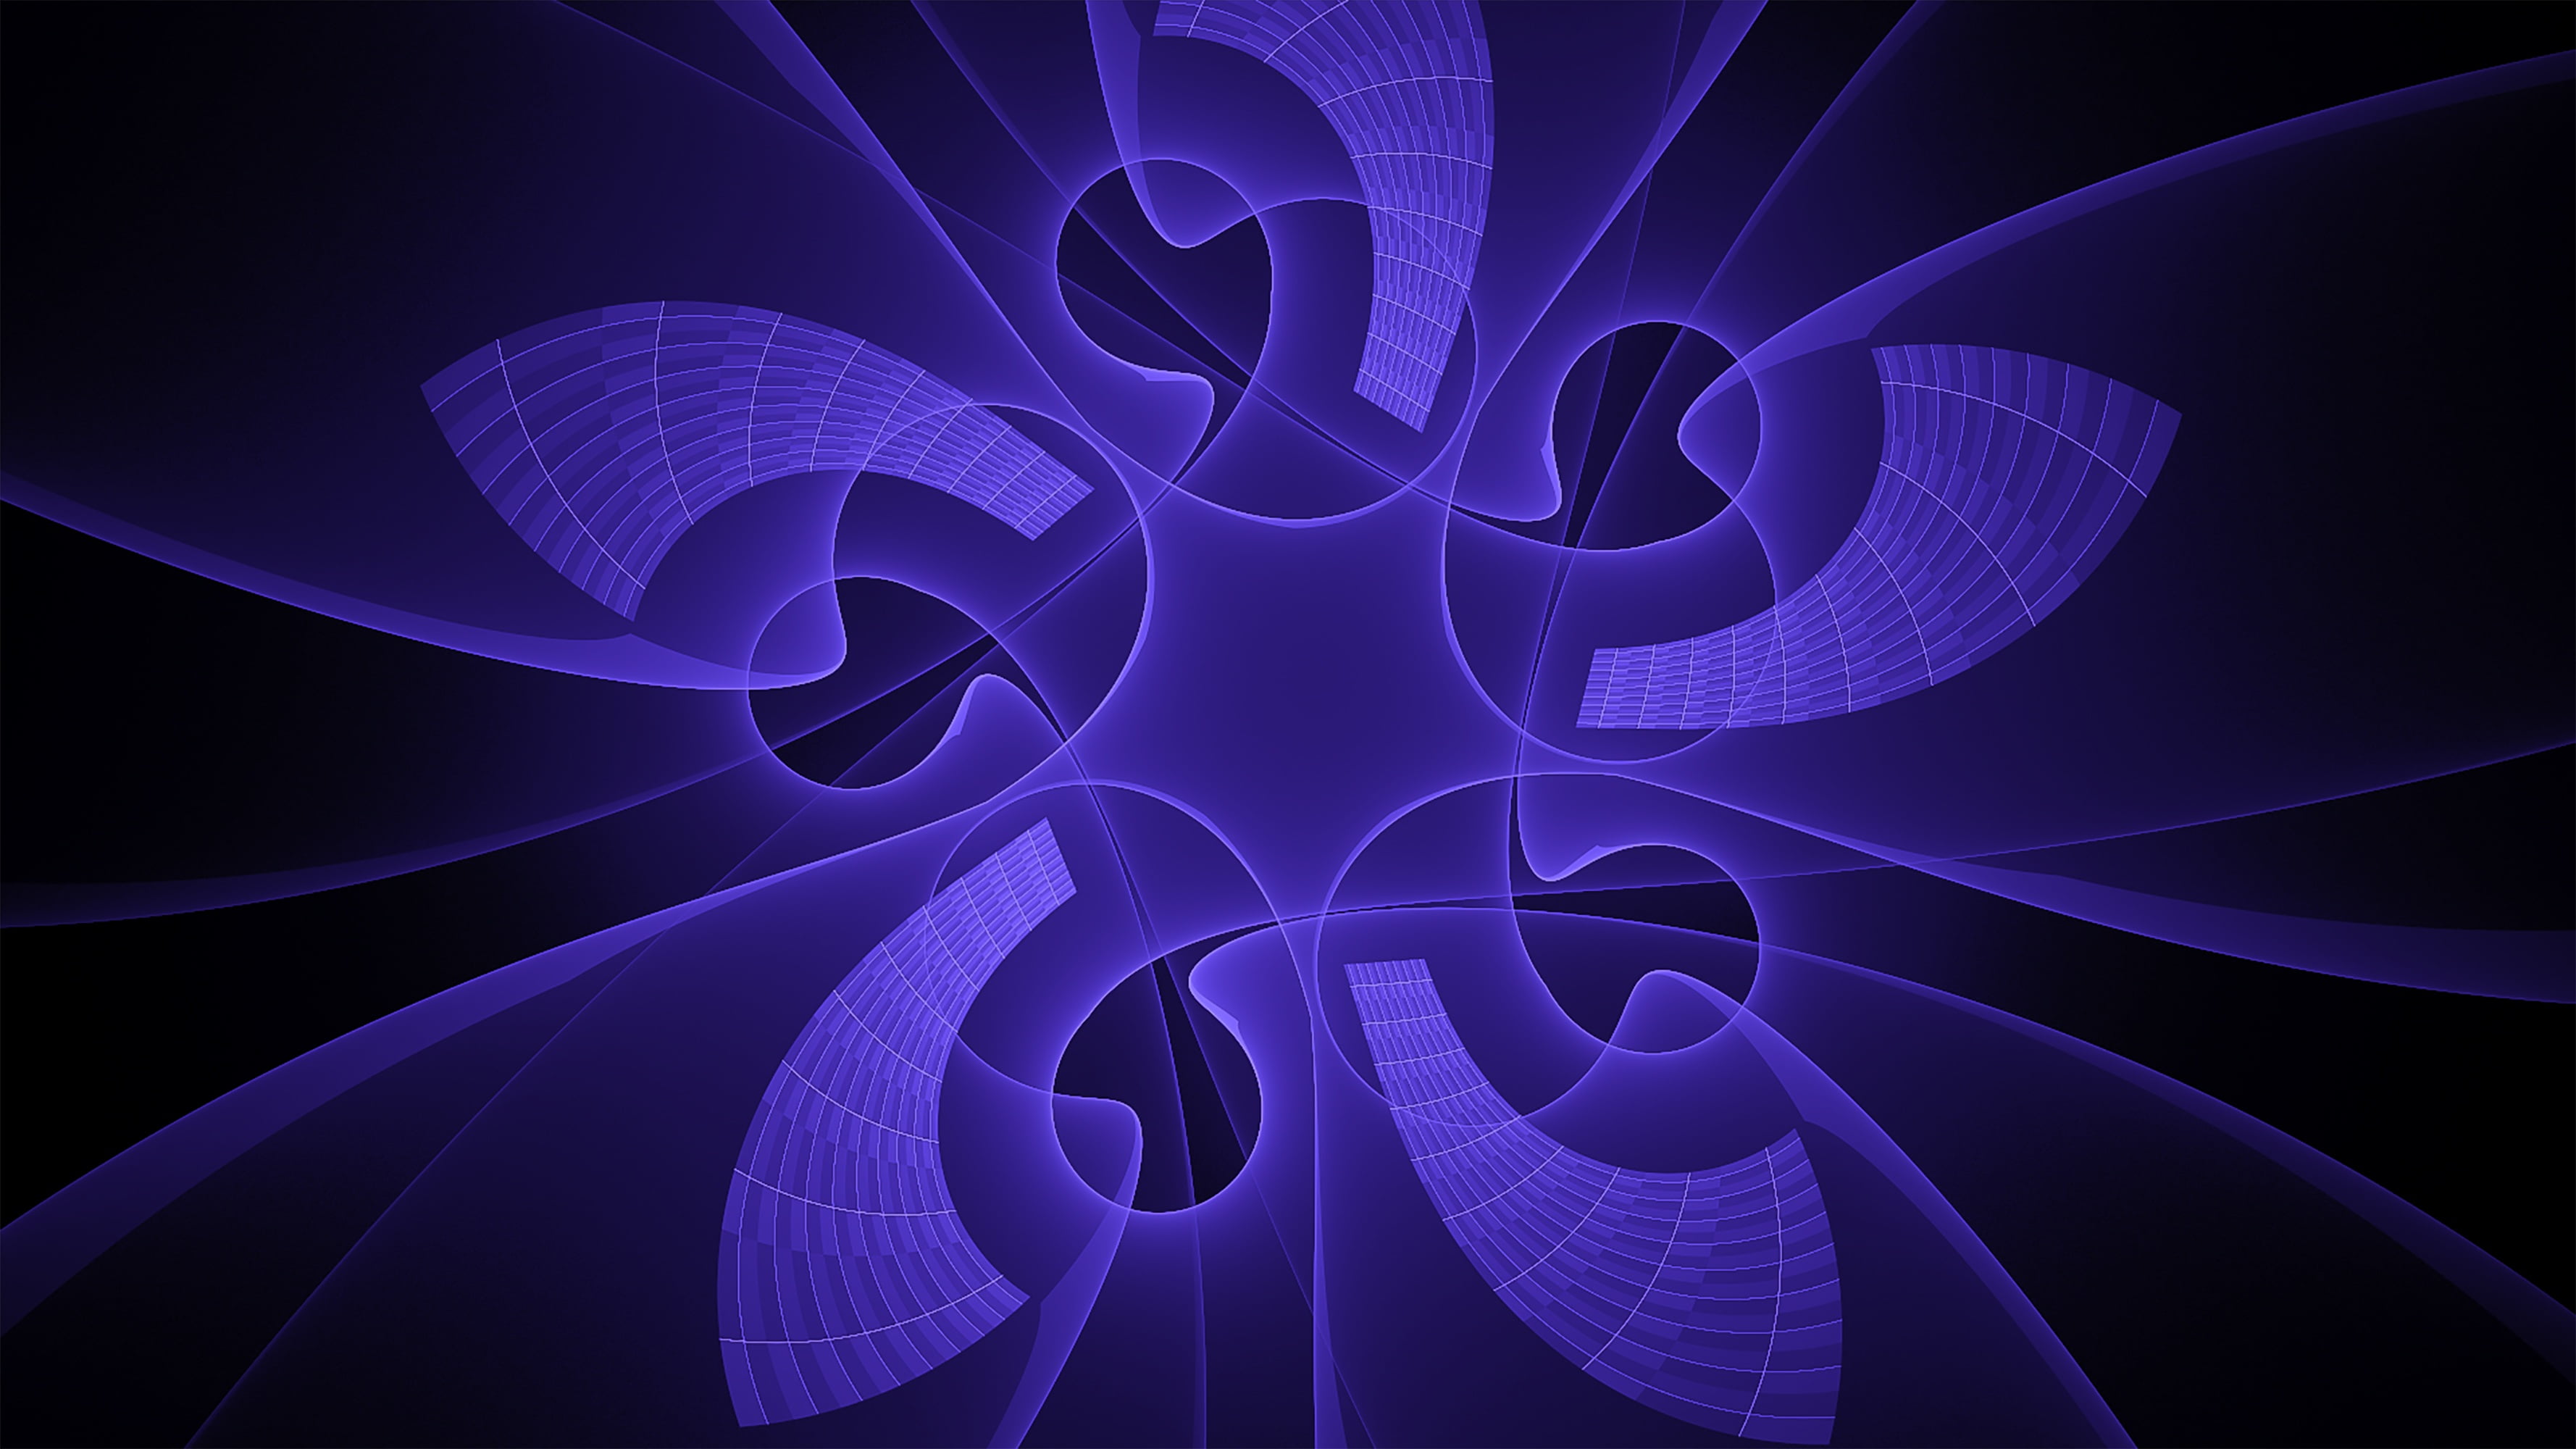 purple digital wallpaper